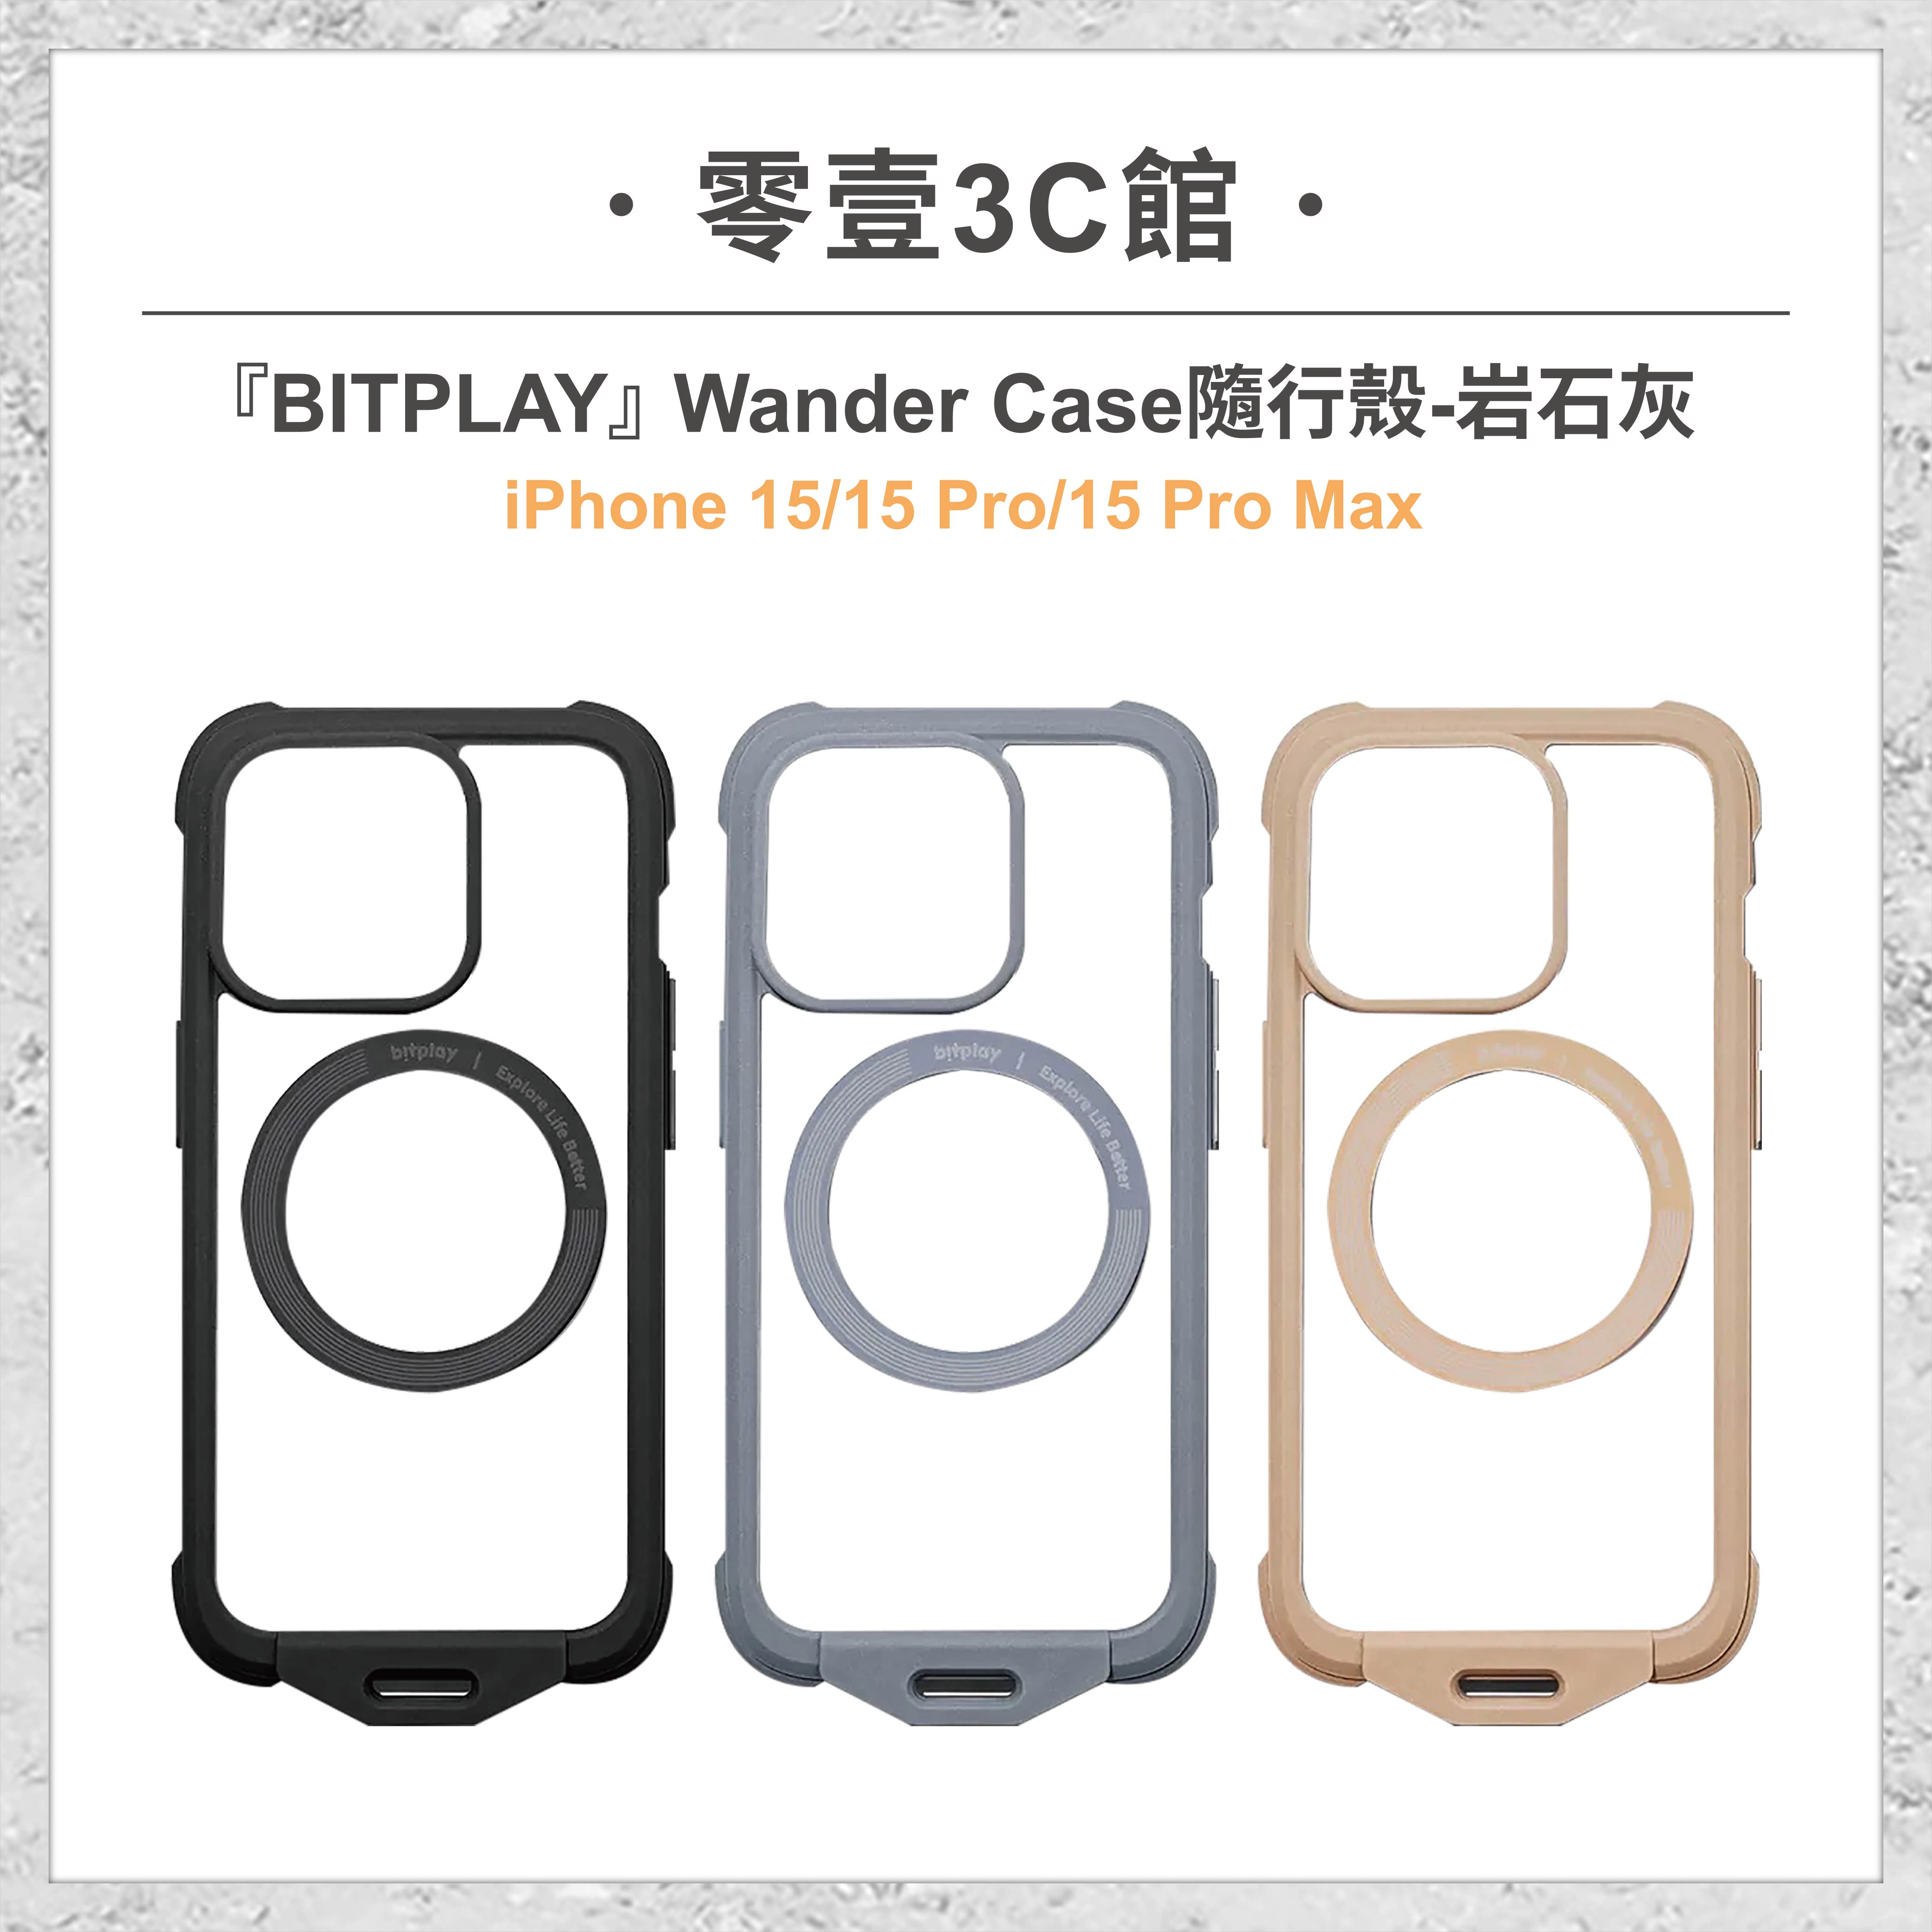 『bitplay』iPhone 15/Pro/Pro Max Wander Case 磁吸隨行殼 防摔殼 手機殼